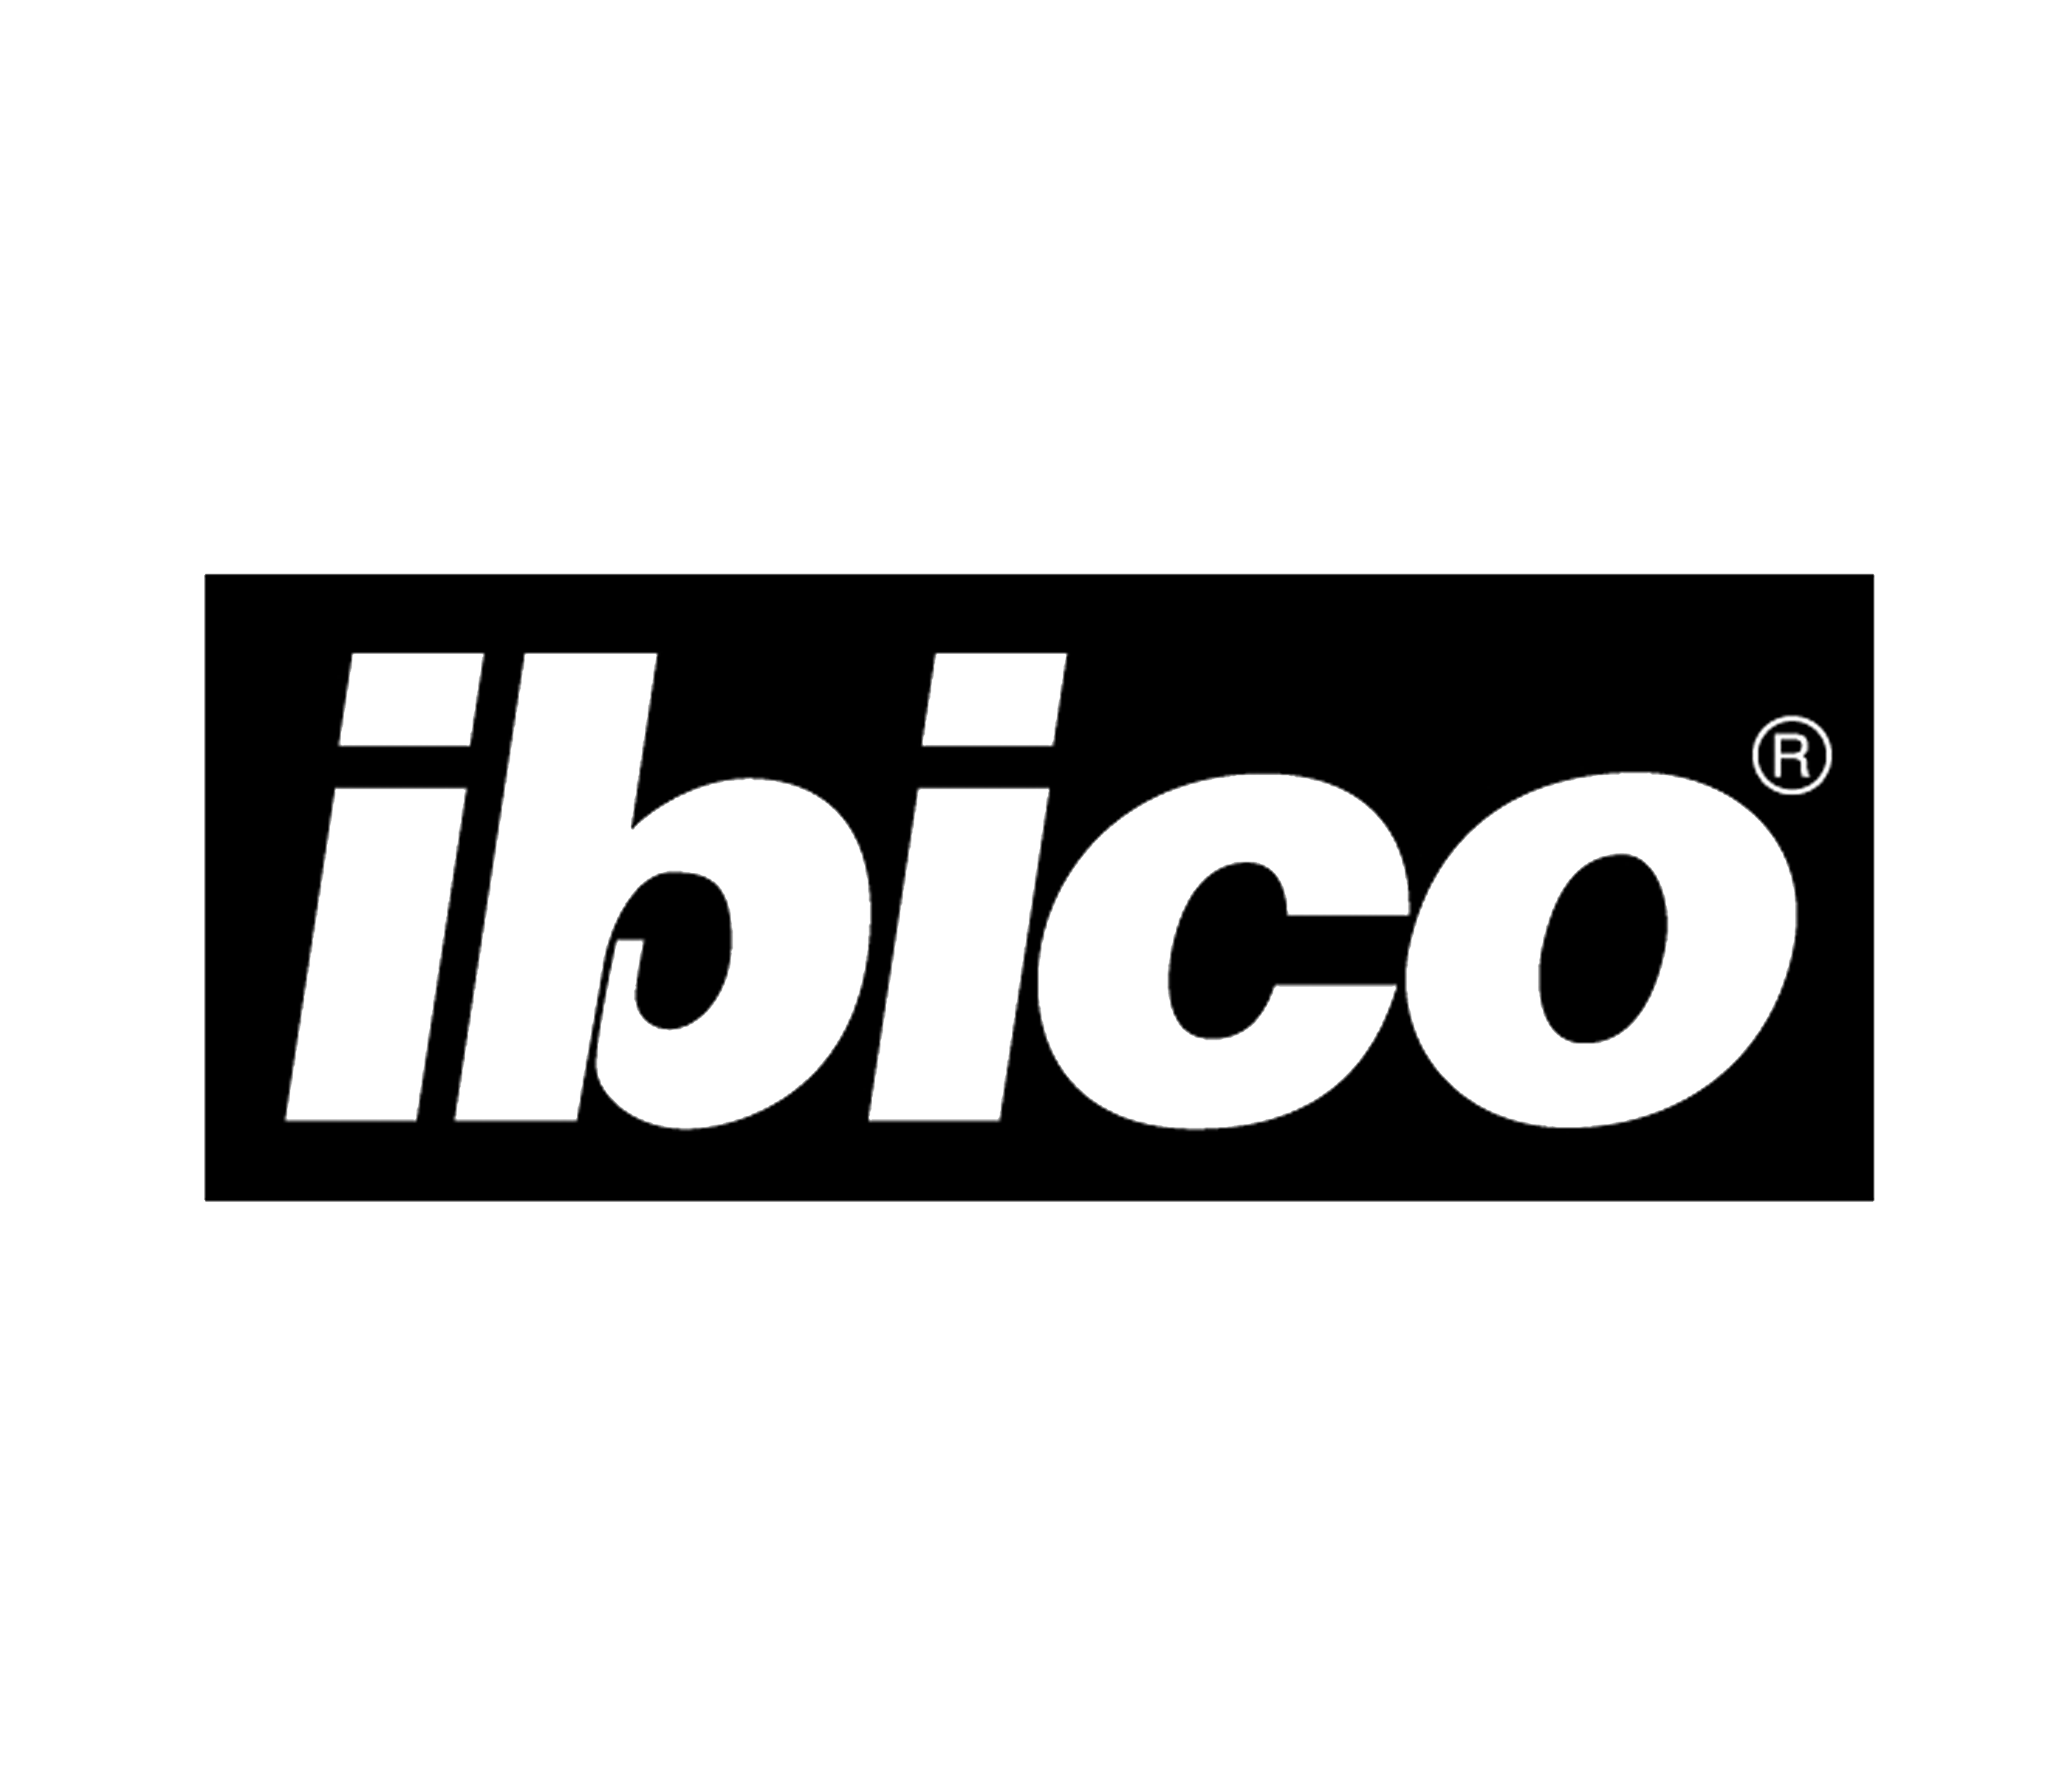 ibico